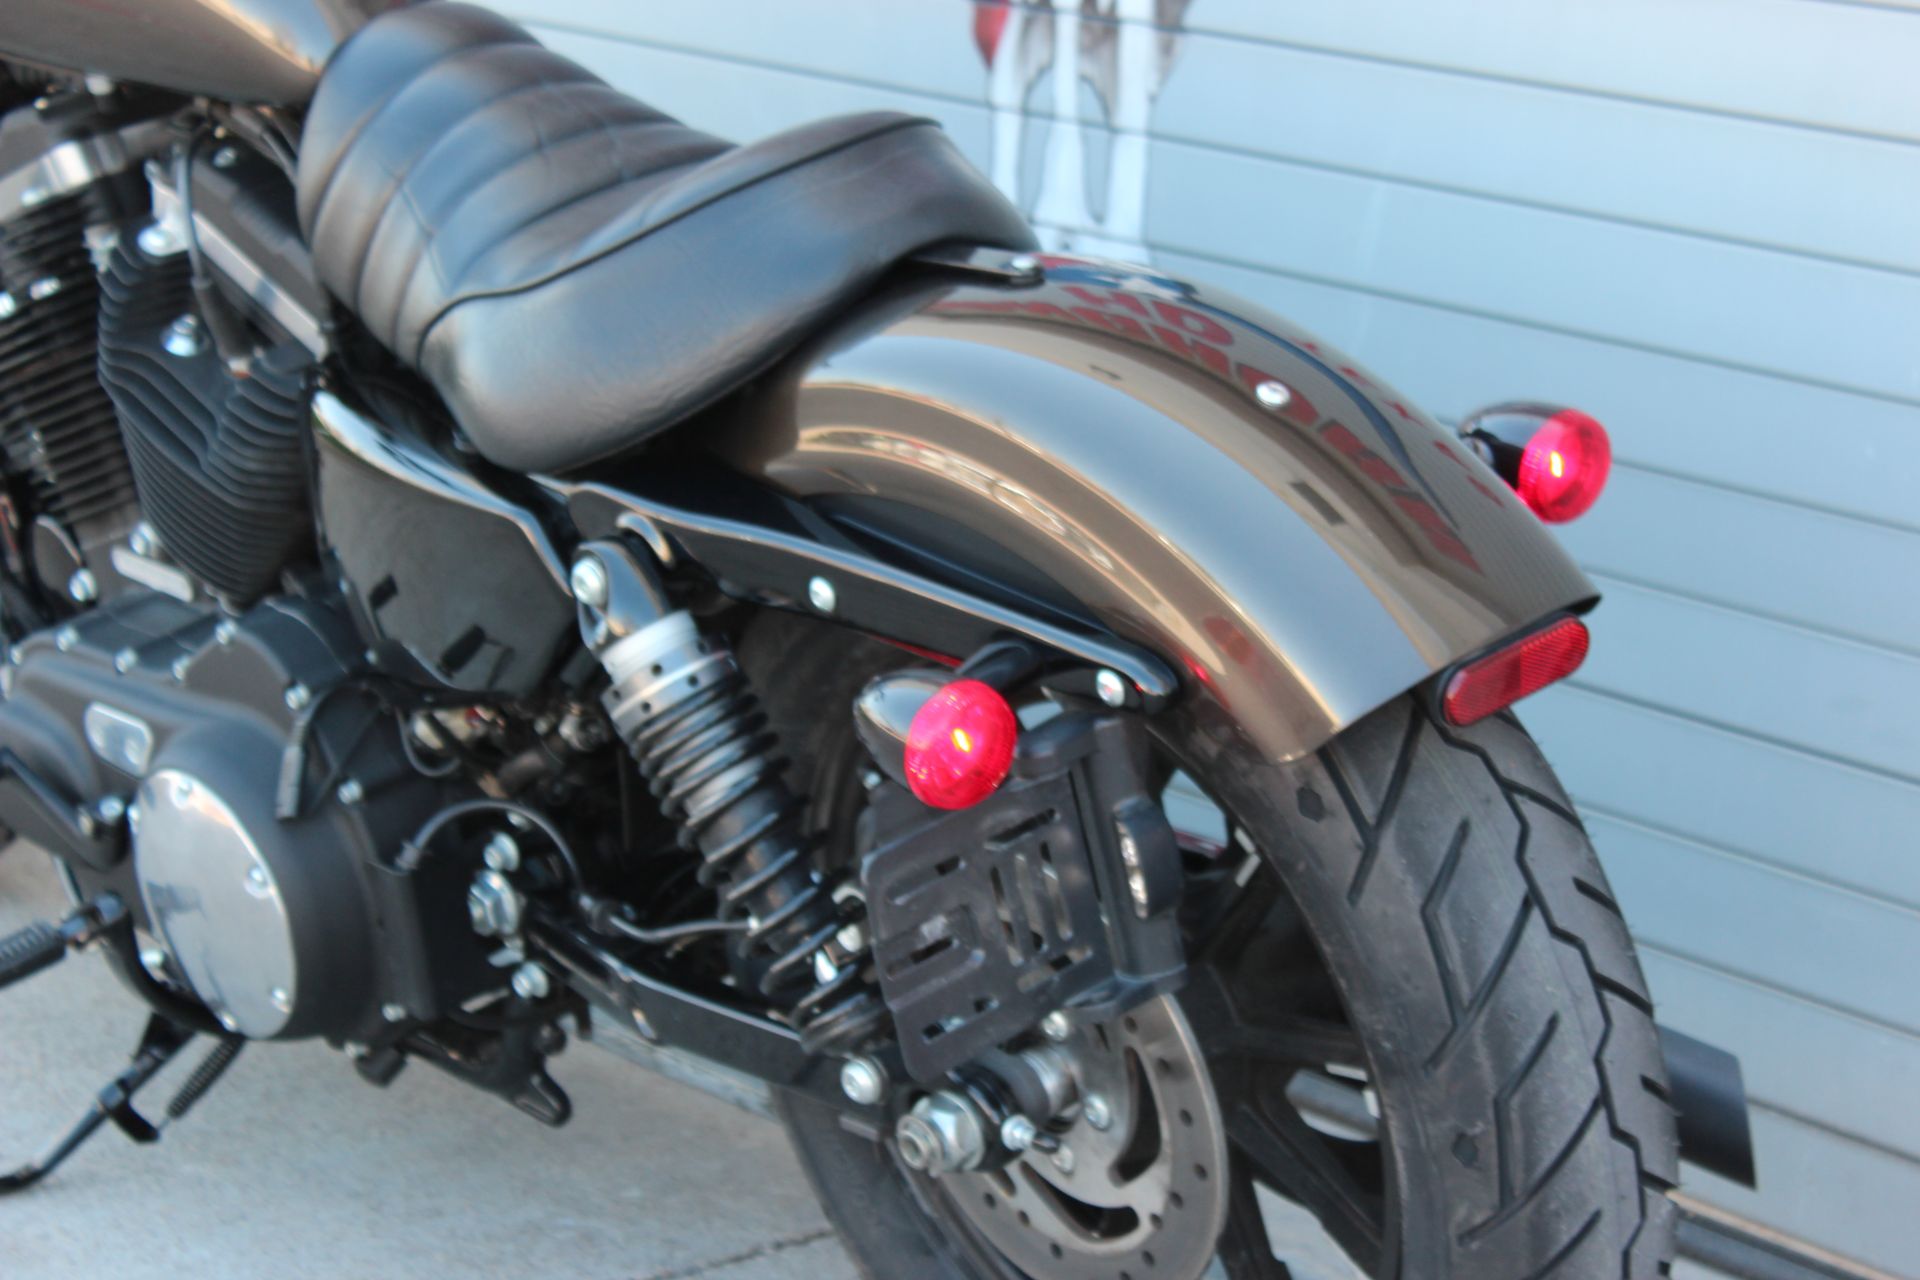 2020 Harley-Davidson Iron 883™ in Grand Prairie, Texas - Photo 21